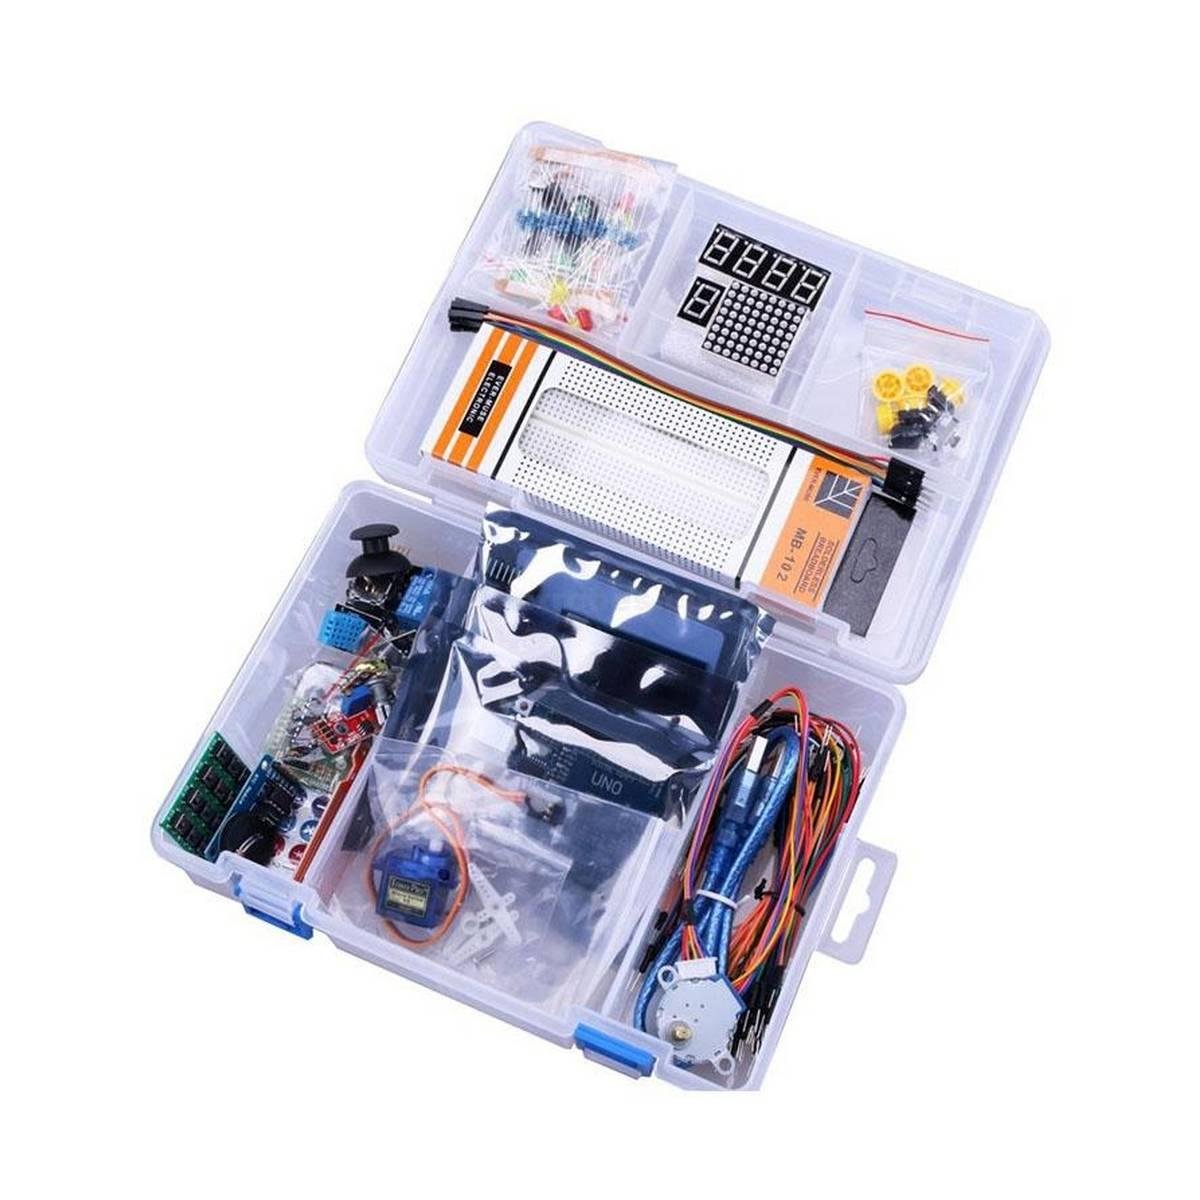 Arduino Starter Kit from Arduino.cc